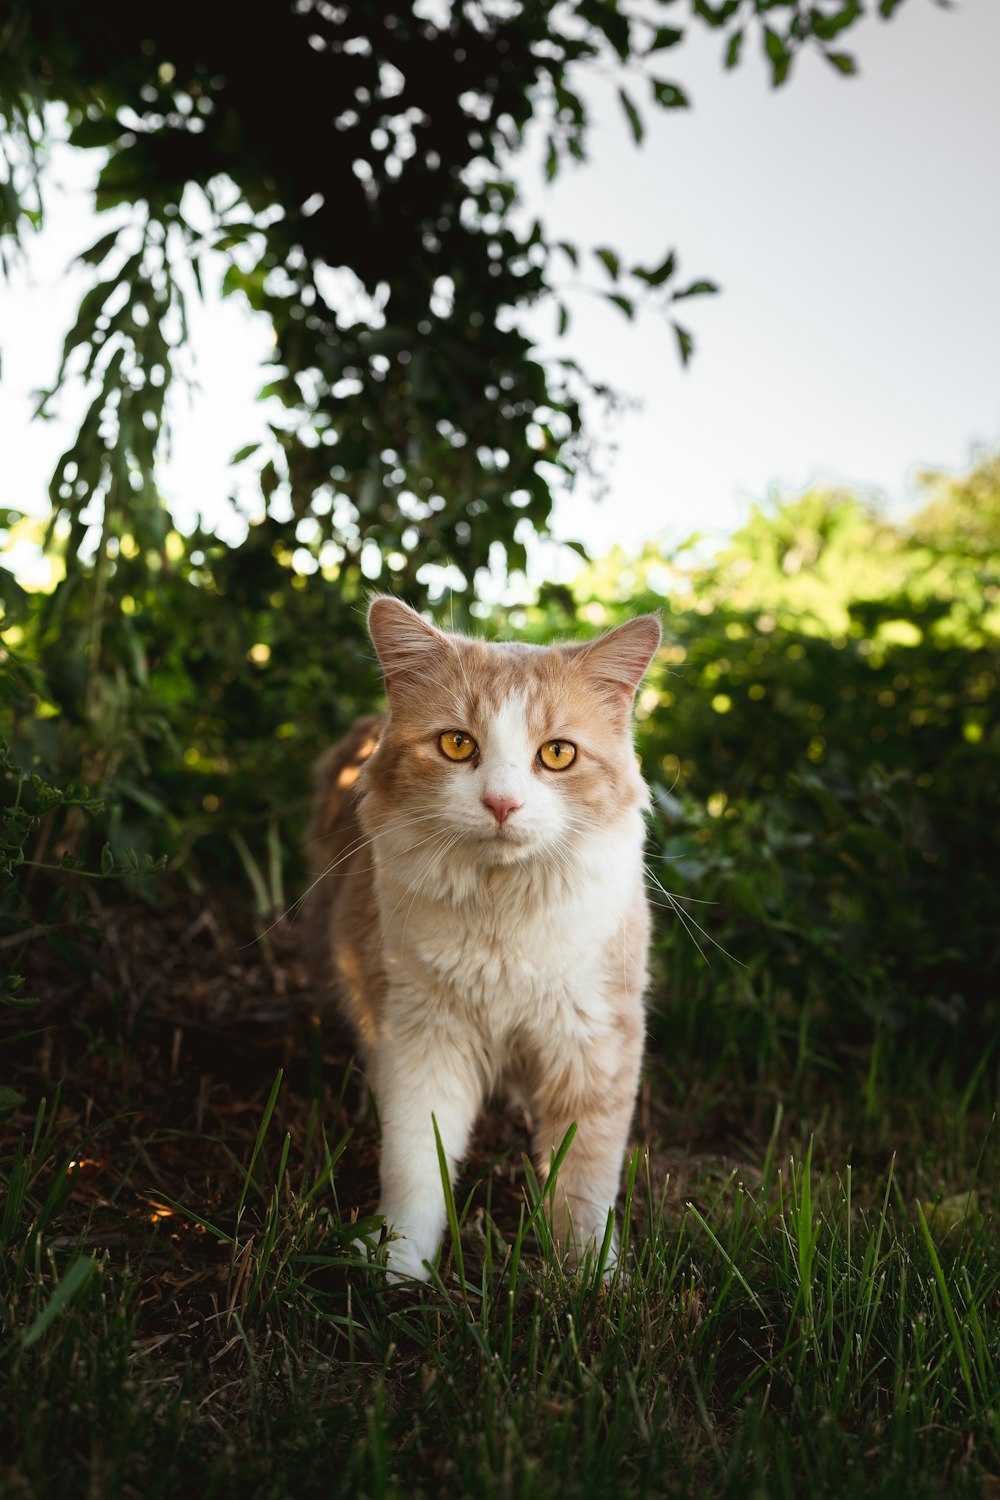 a cat standing in grass